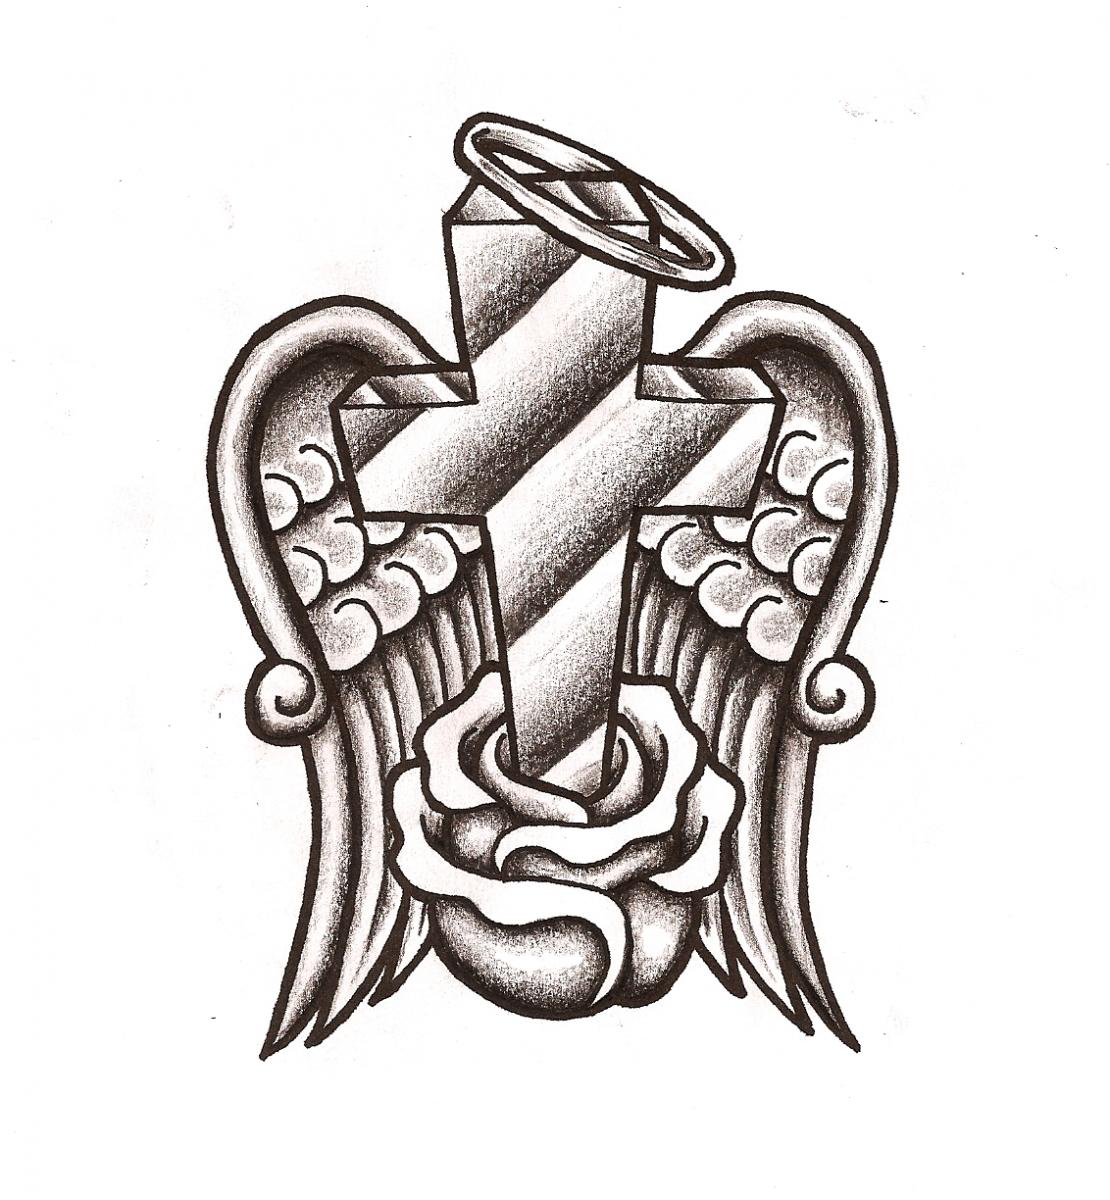 Drawings Of Crosses With Wings